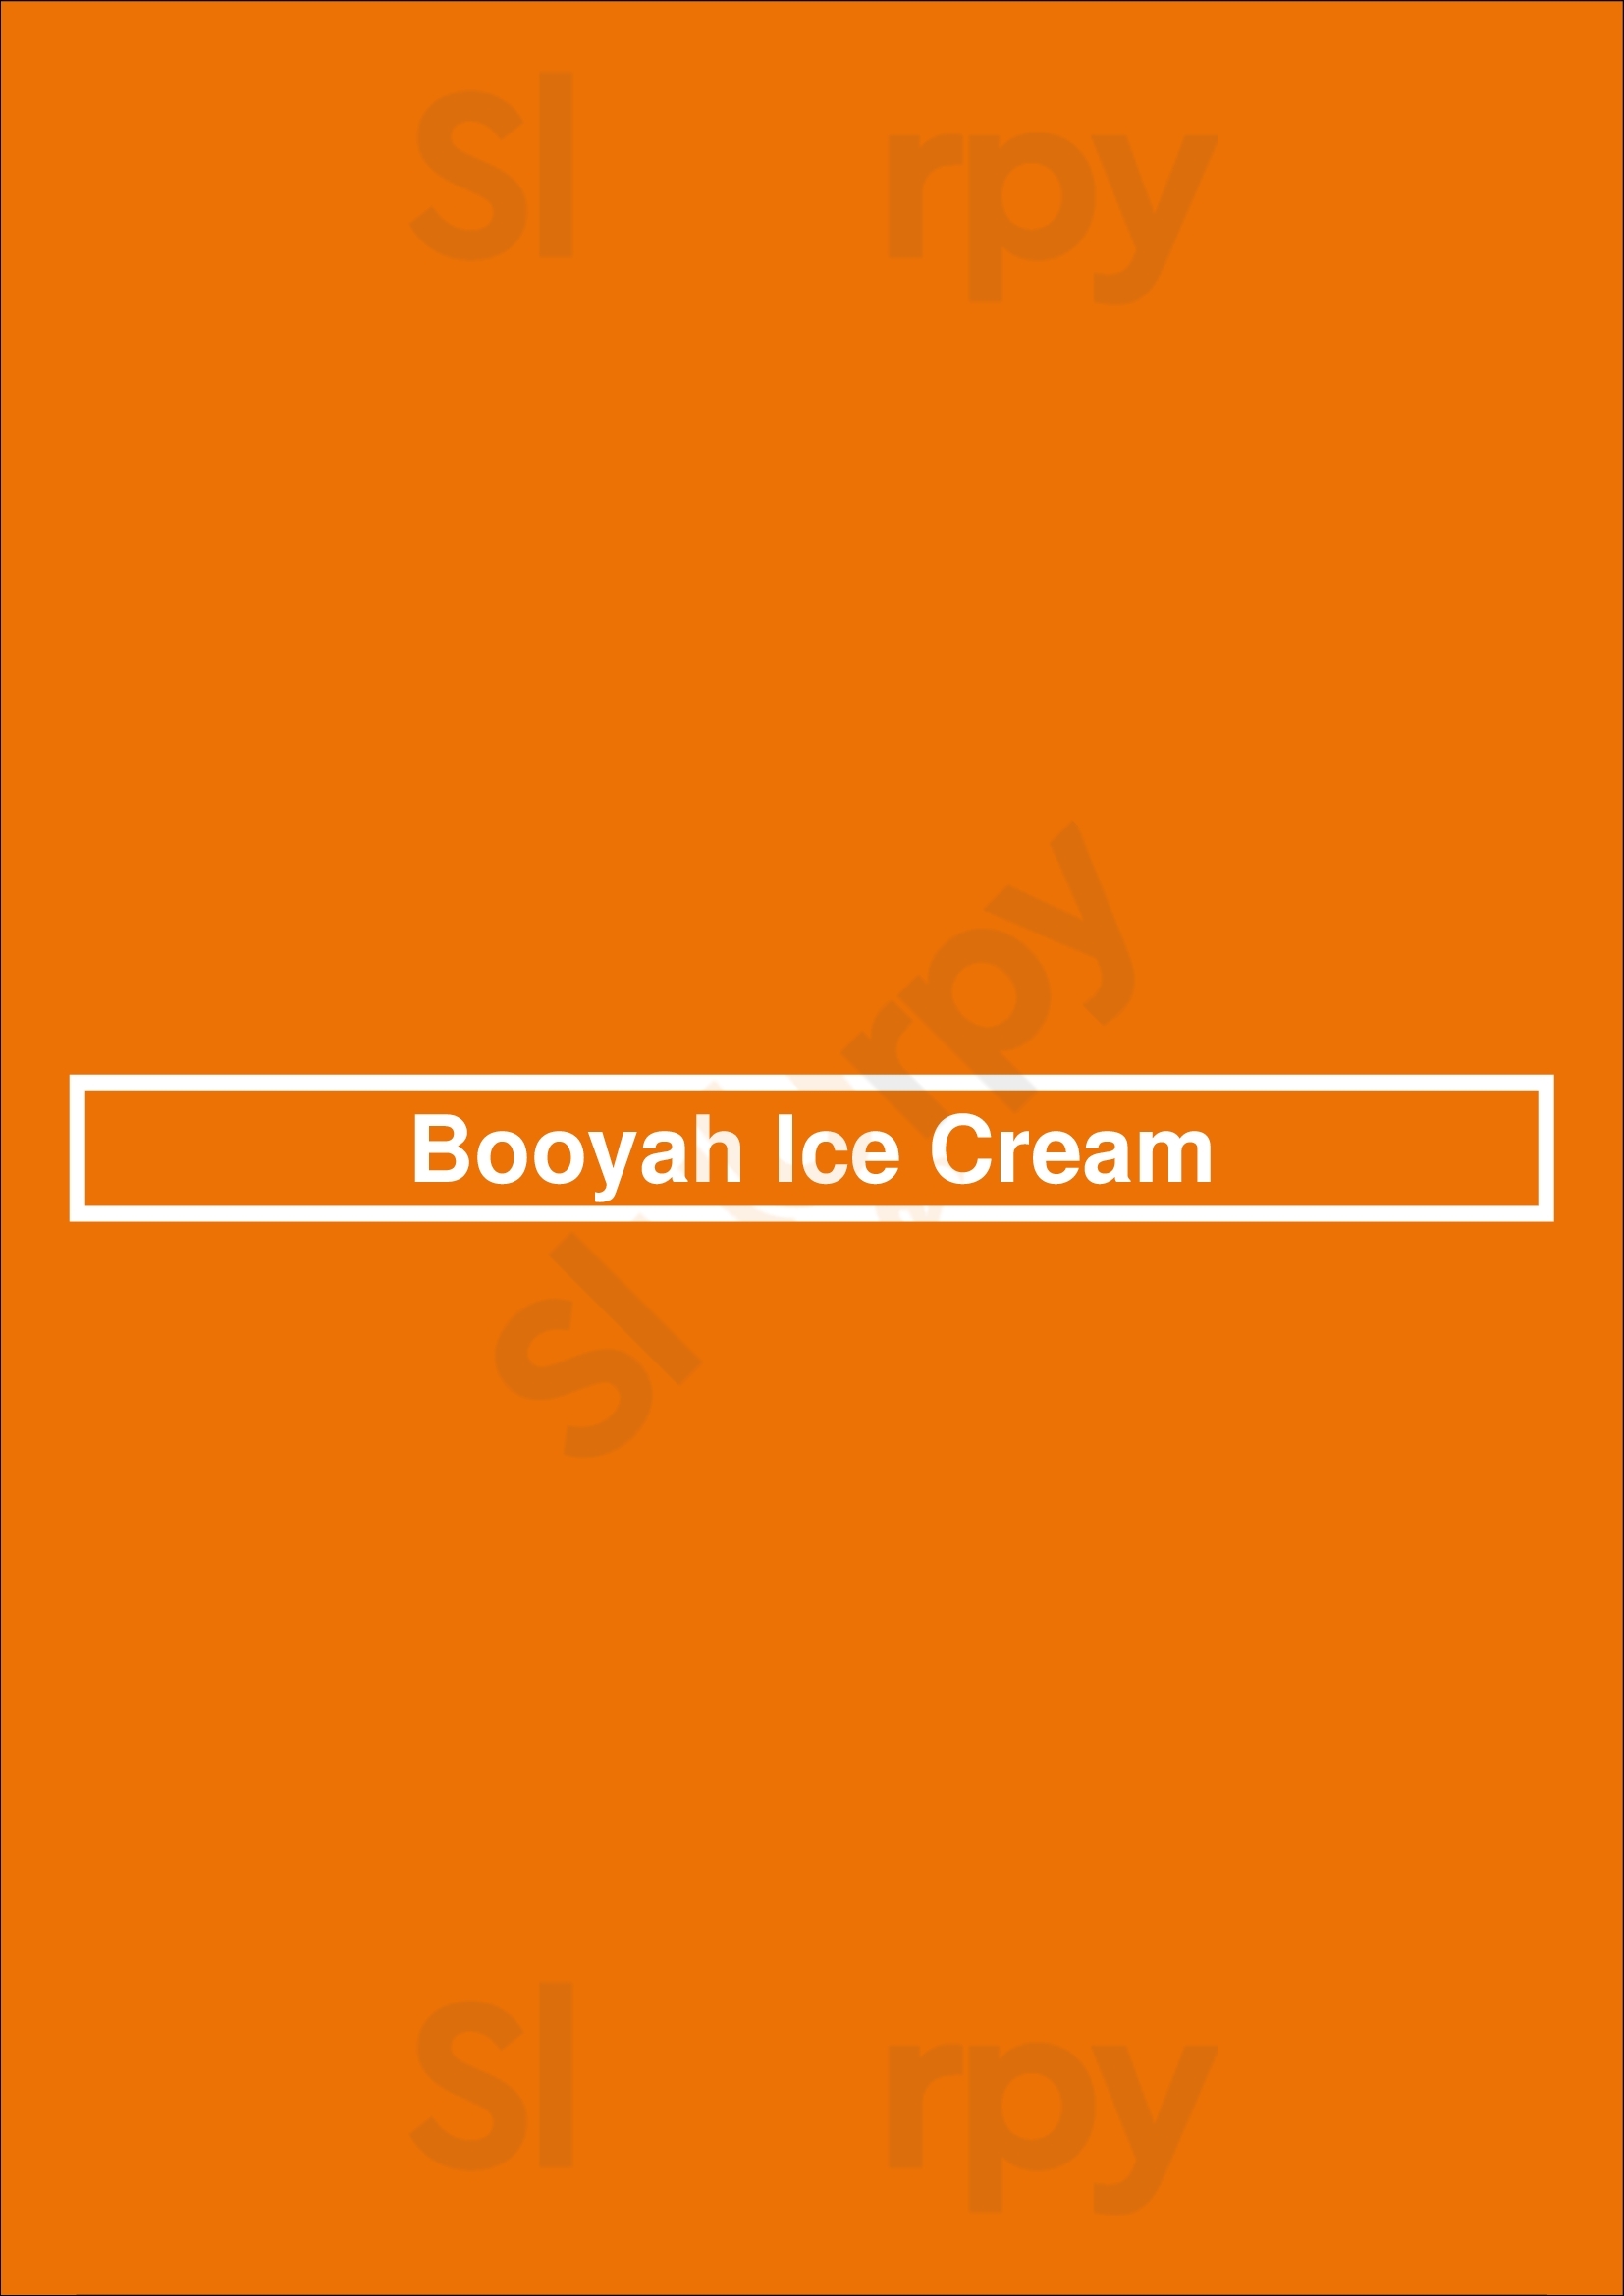 Booyah Ice Cream Toronto Menu - 1